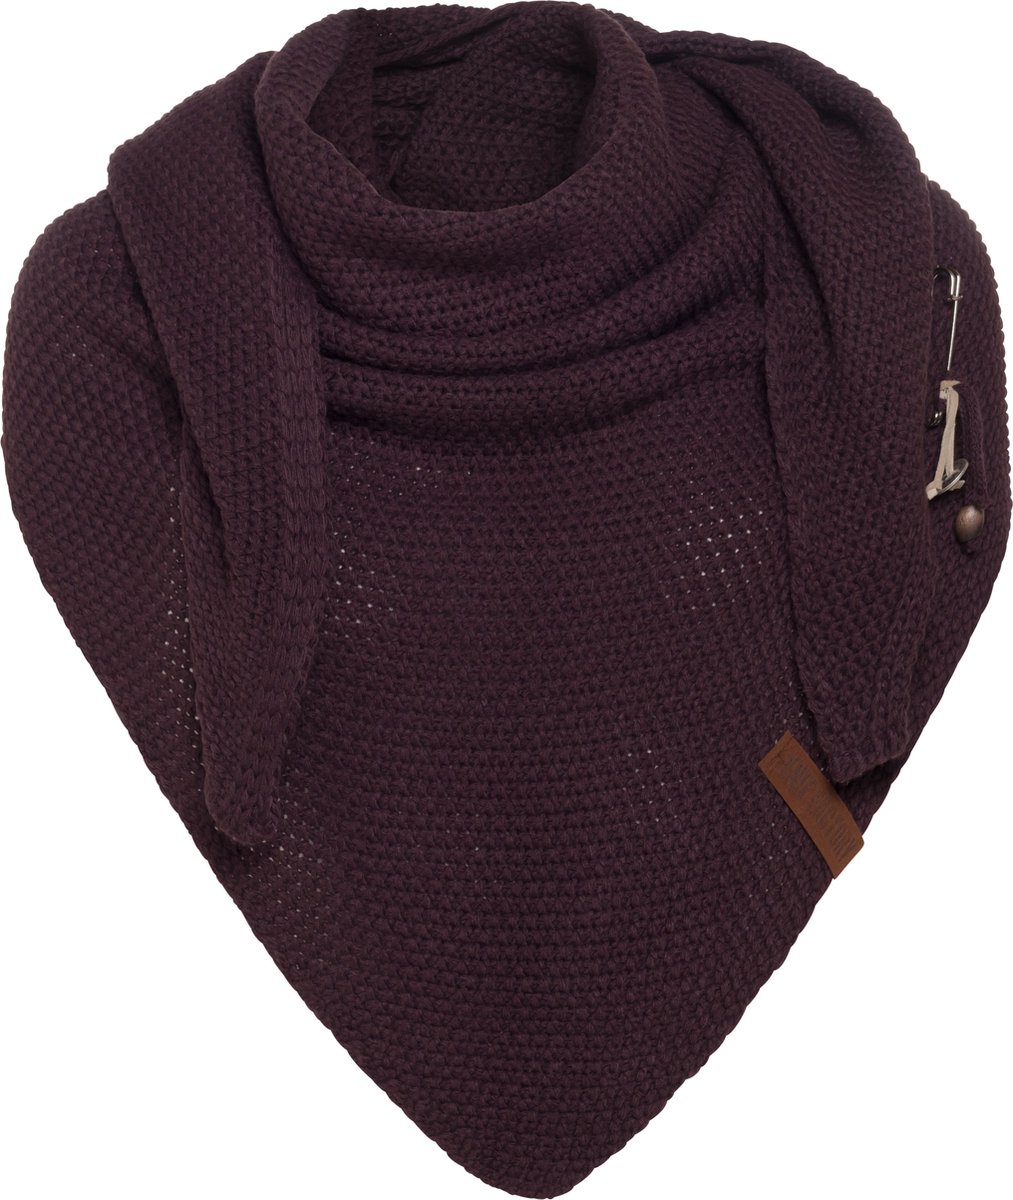 Knit Factory Coco Gebreide Omslagdoek - Driehoek Sjaal Dames - Dames sjaal - Wintersjaal - Stola - Wollen sjaal - Paarse sjaal - Aubergine - 190x85 cm - Inclusief sierspeld